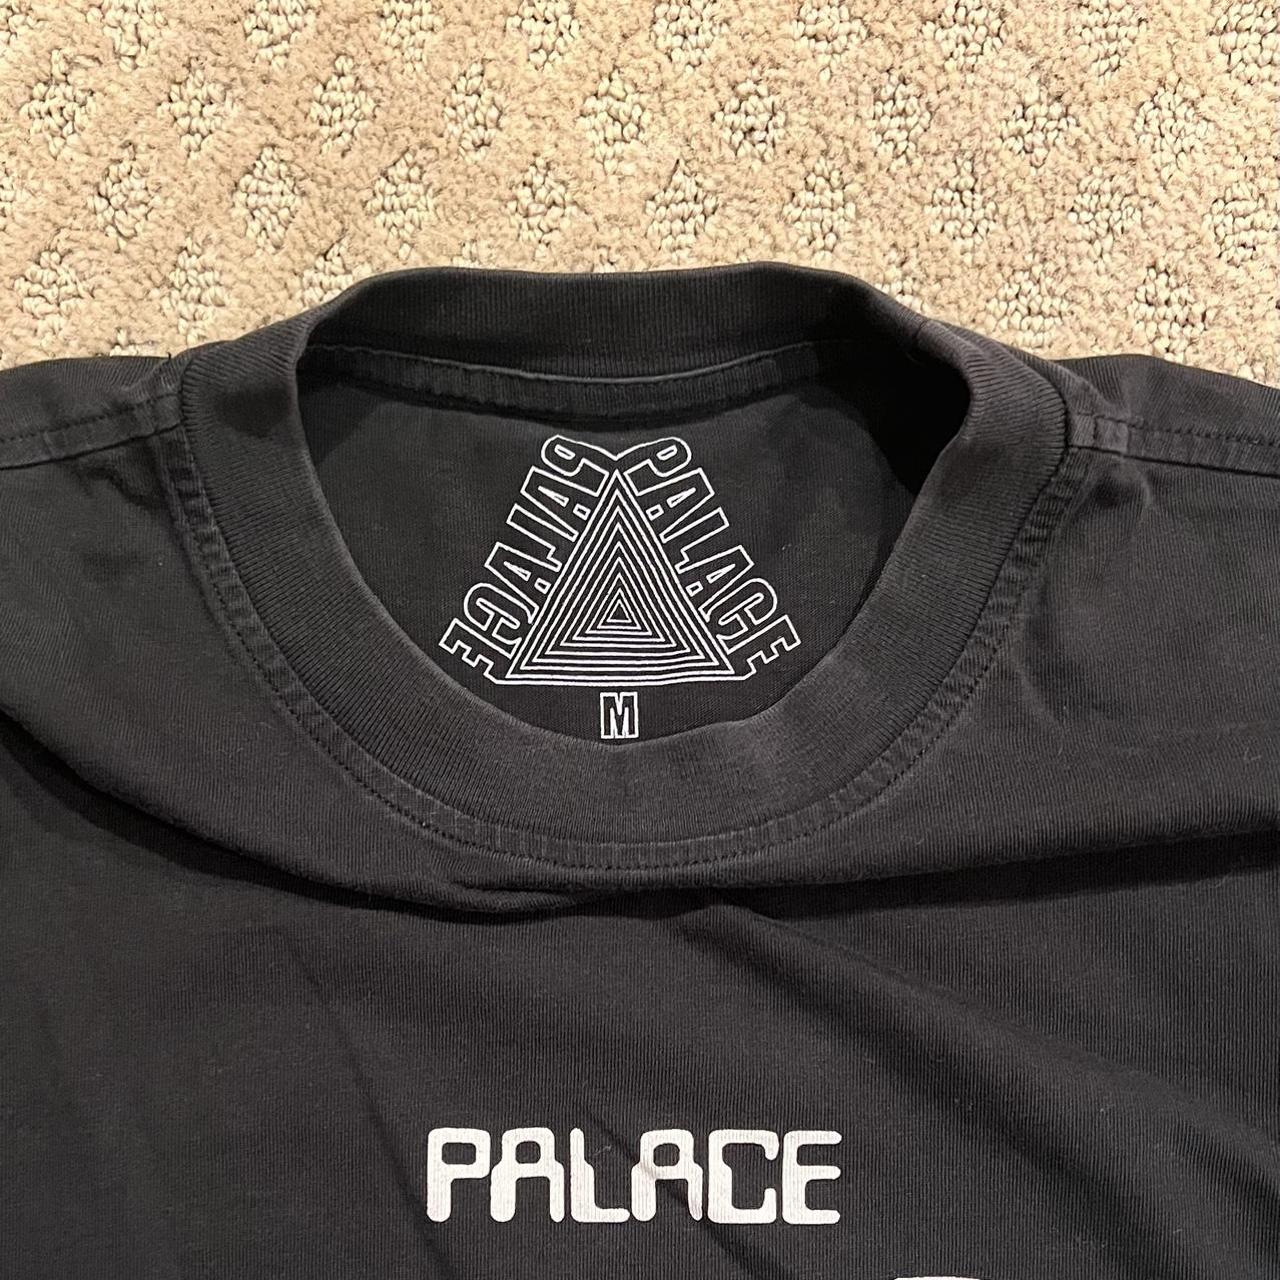 Palace Men's Black and White T-shirt (3)